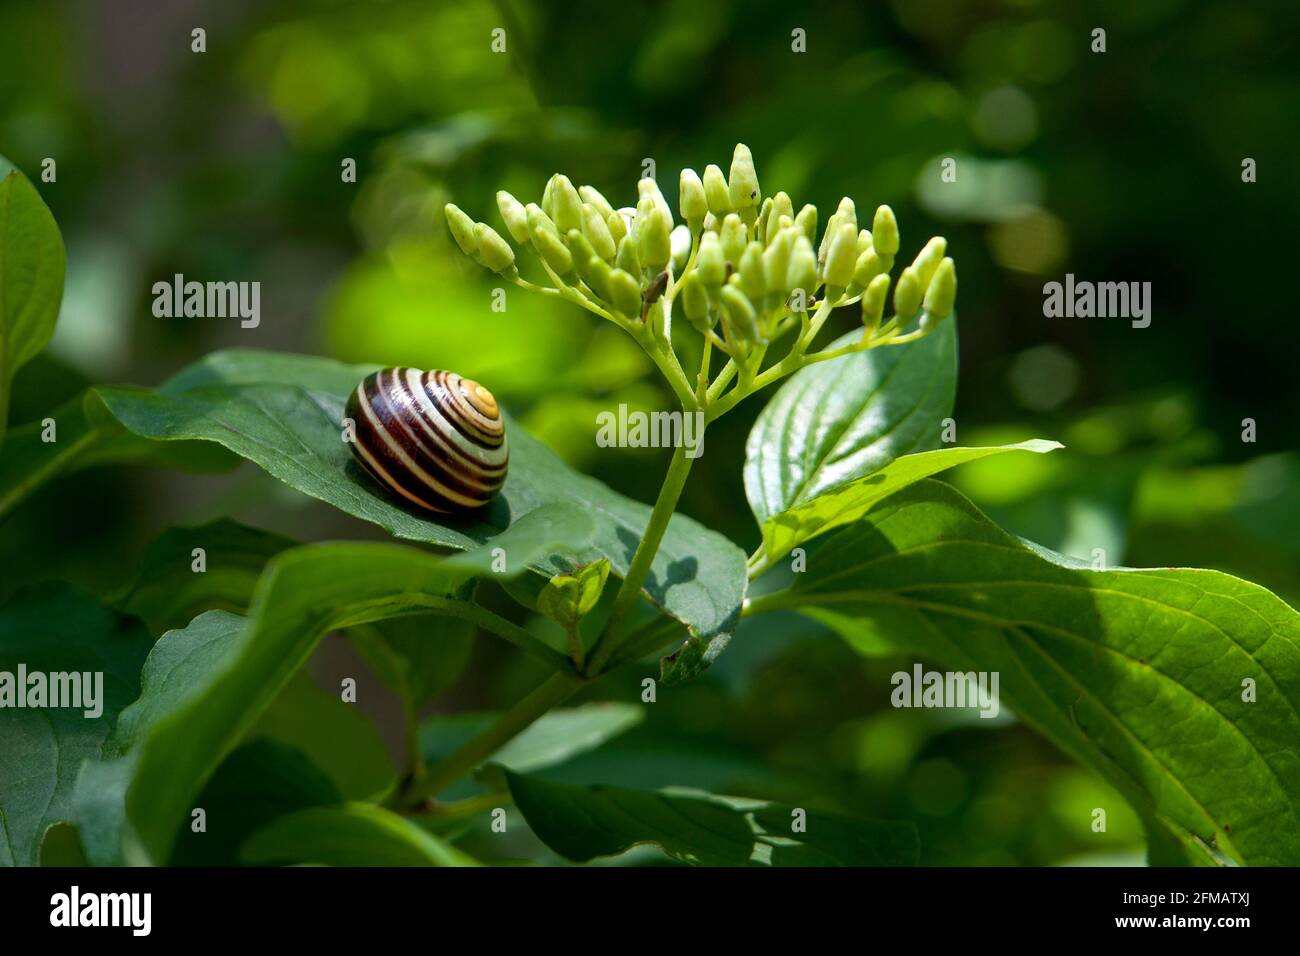 Germany, Baden-Wuerttemberg, cepaea, from the snail family, Helicidae. Stock Photo